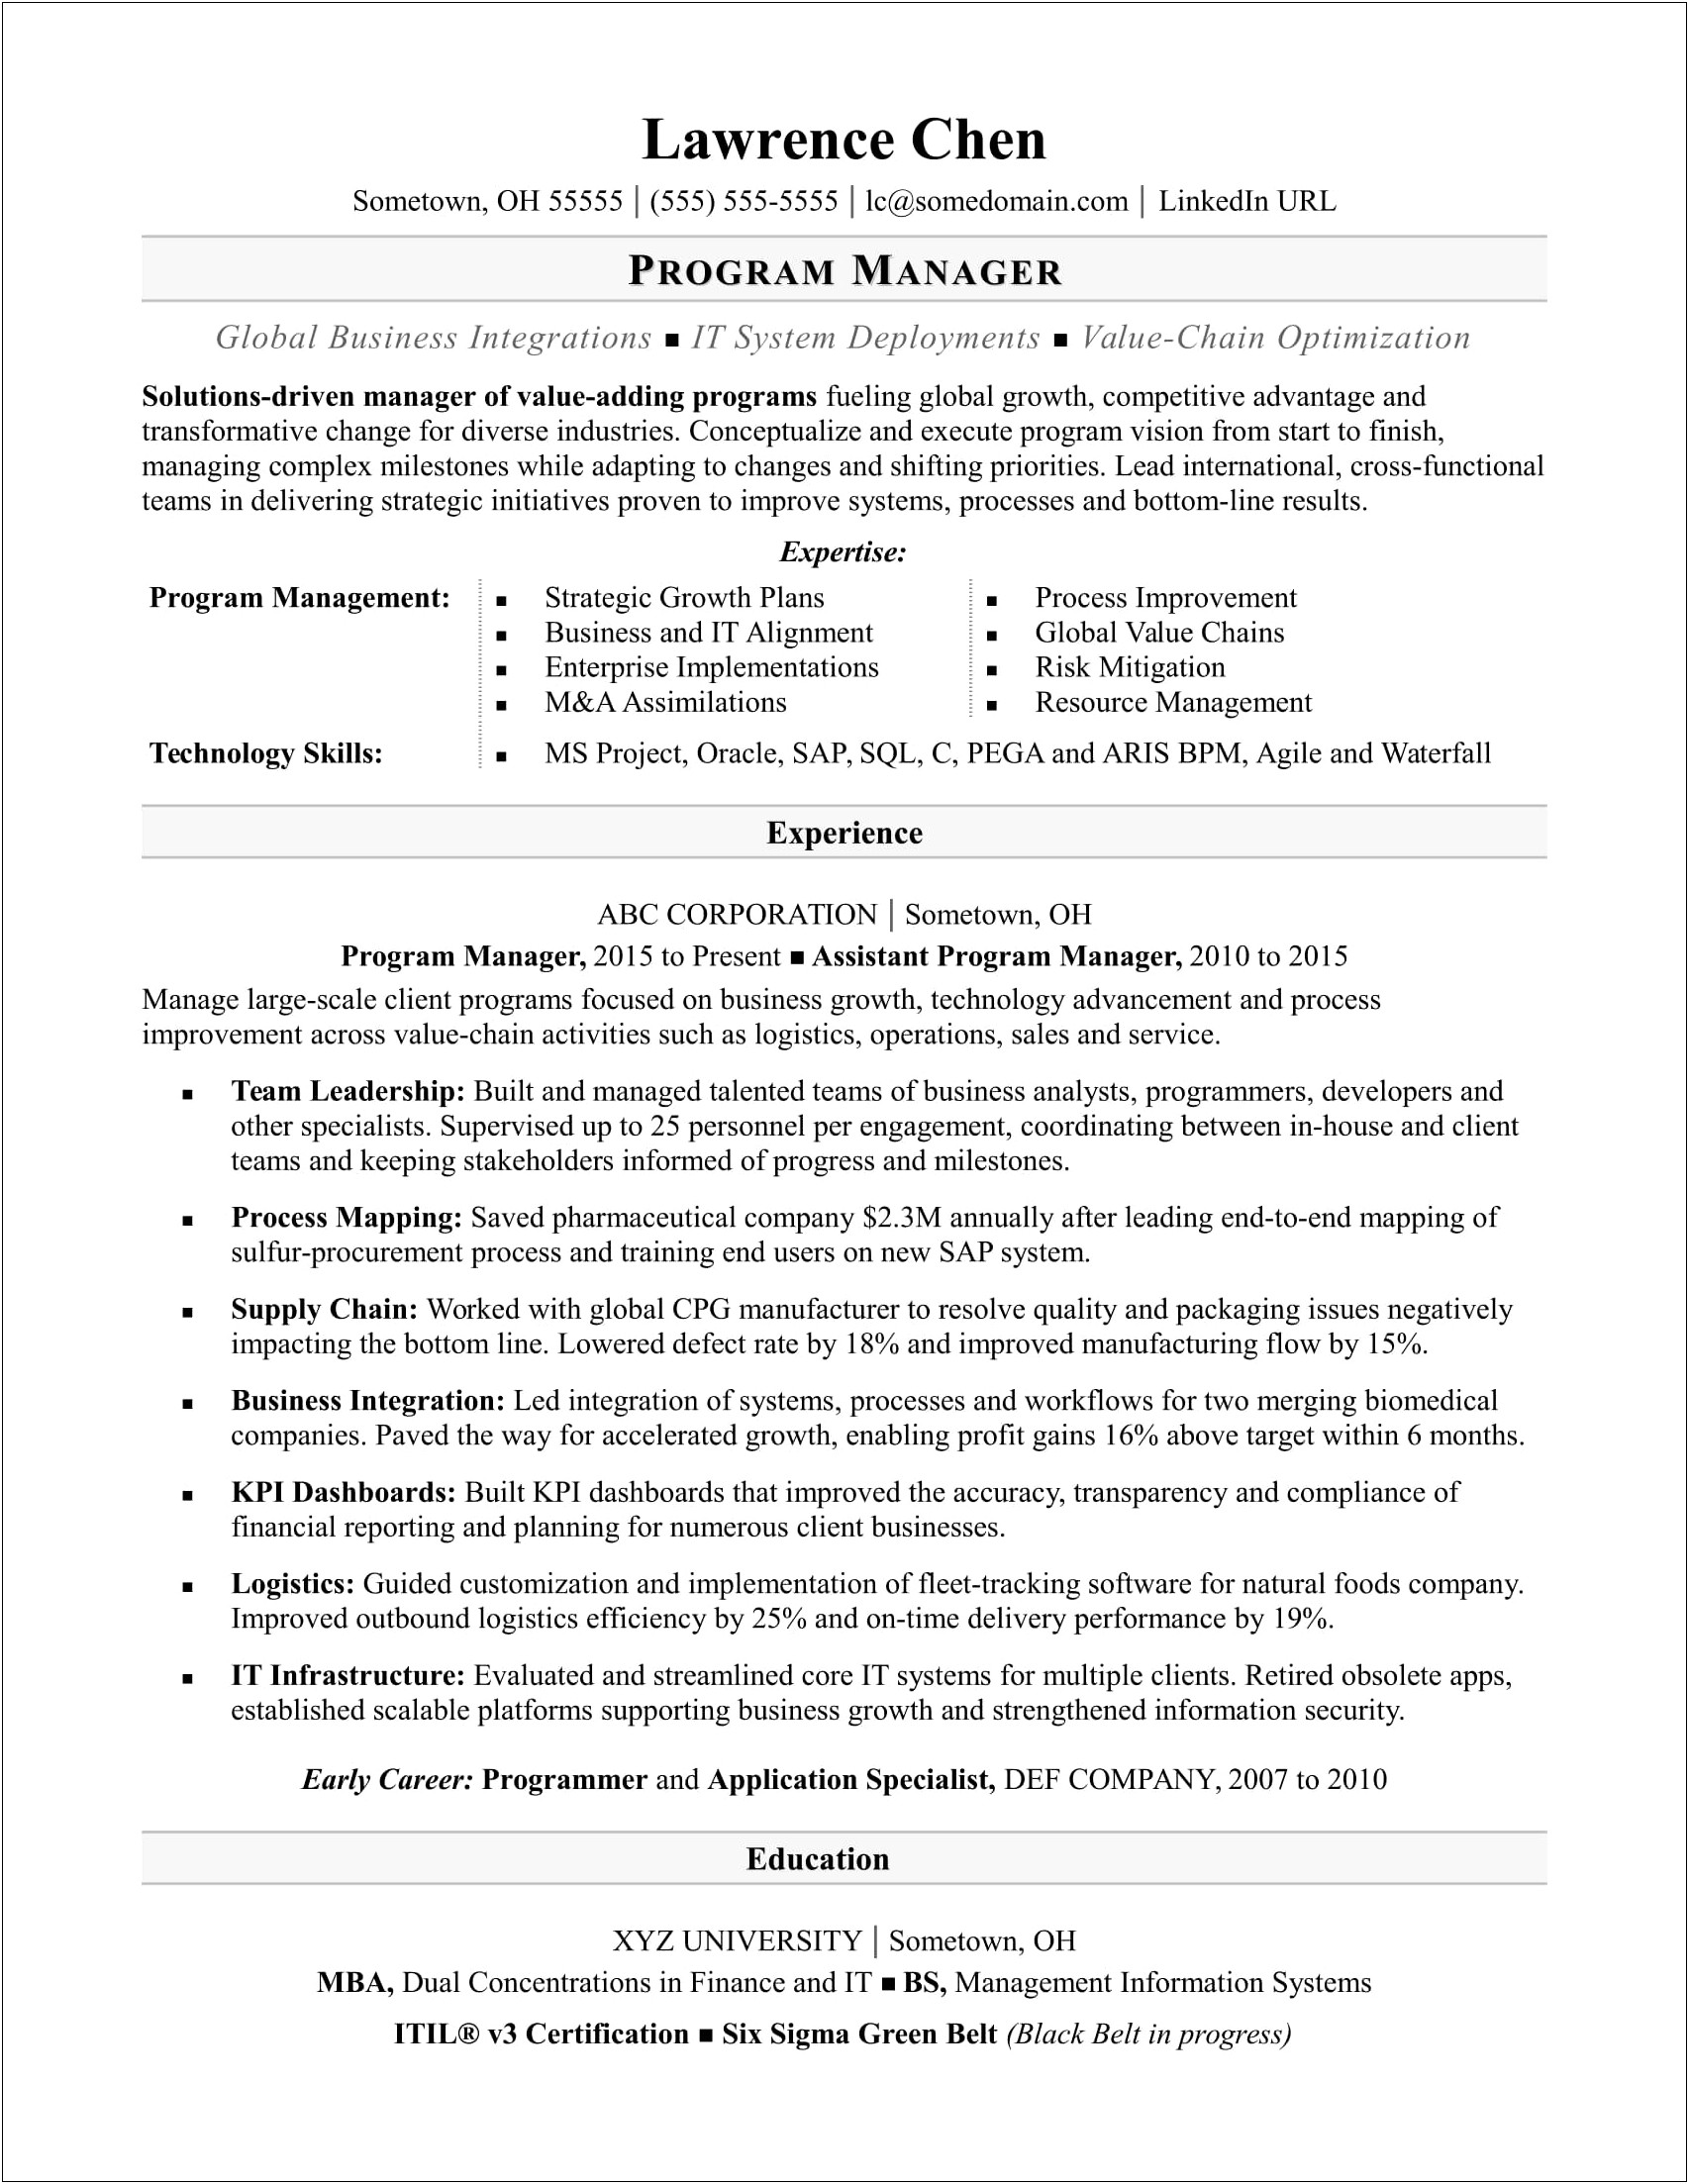 Resume For Non Profit Program Manager